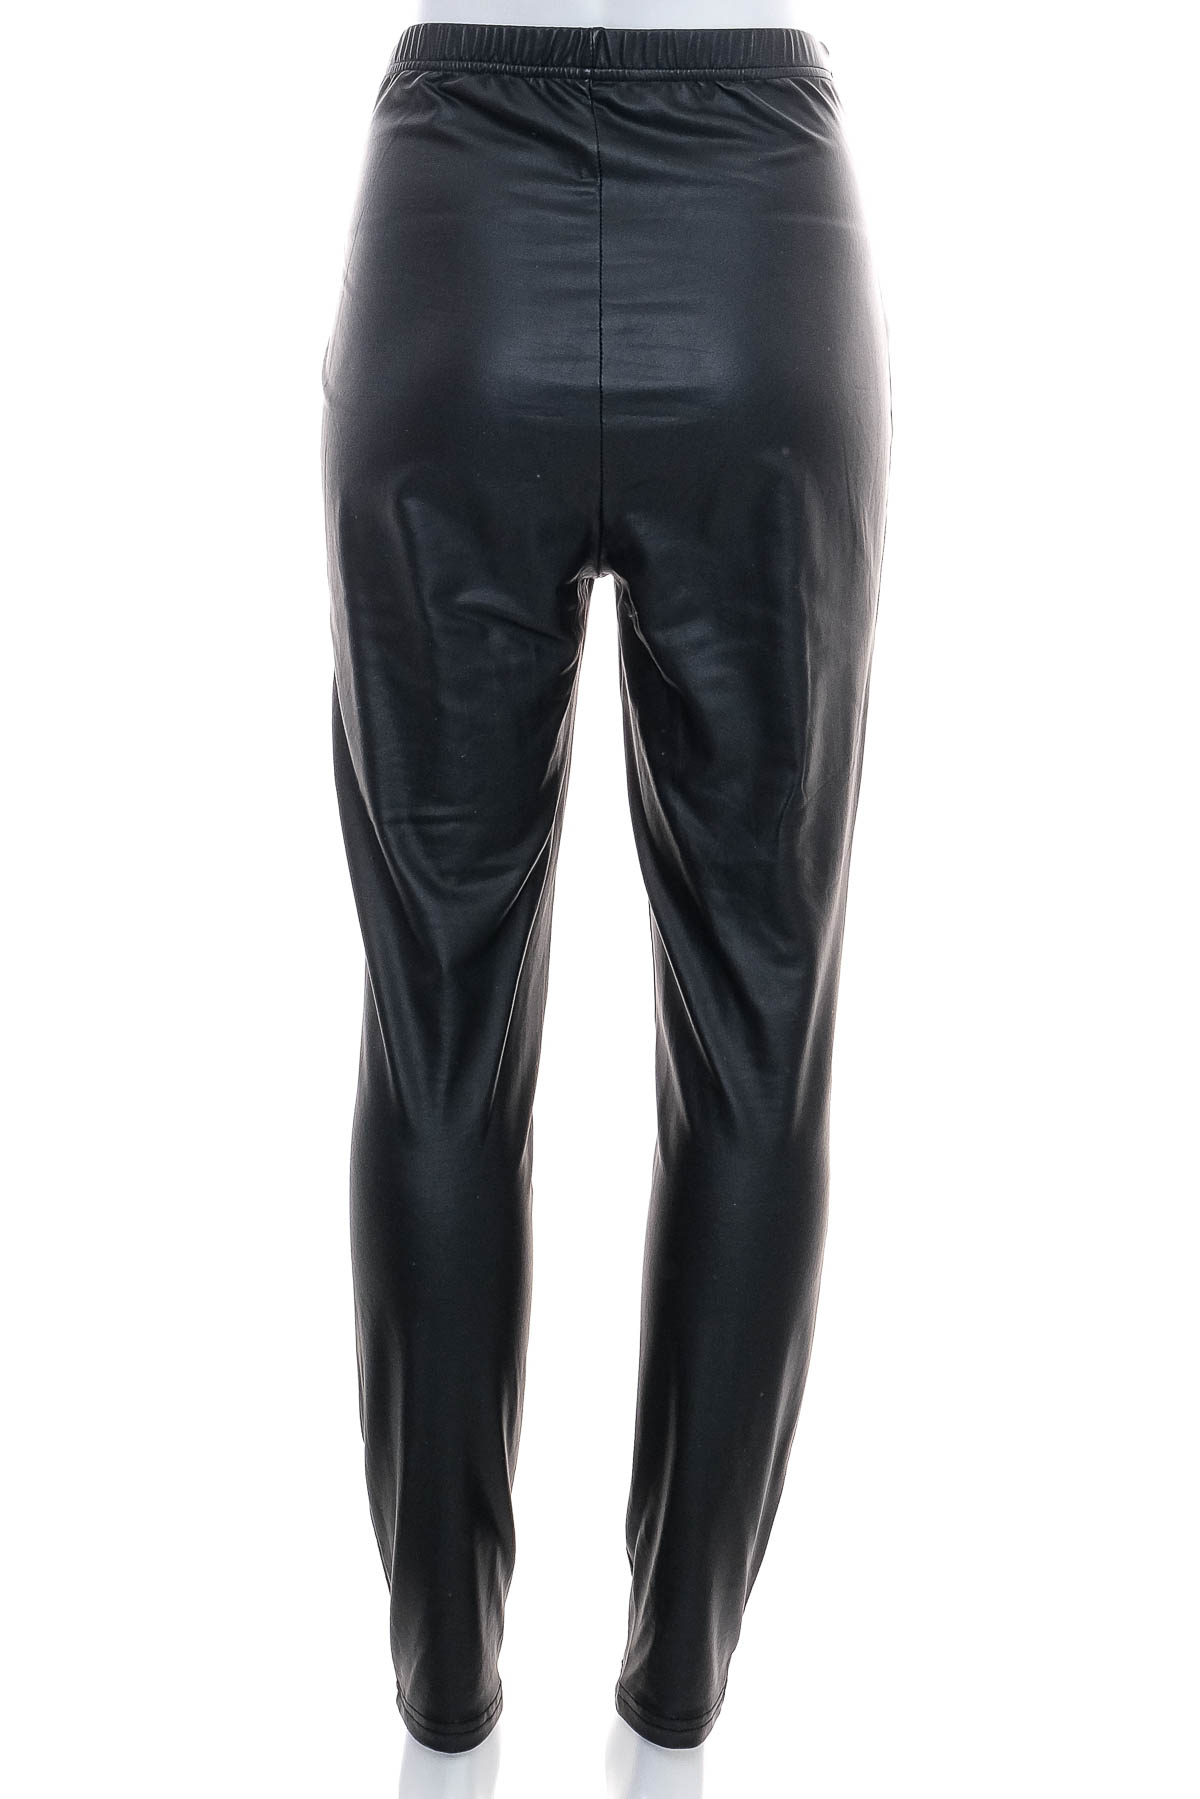 Leather leggings - SHEIN - 1